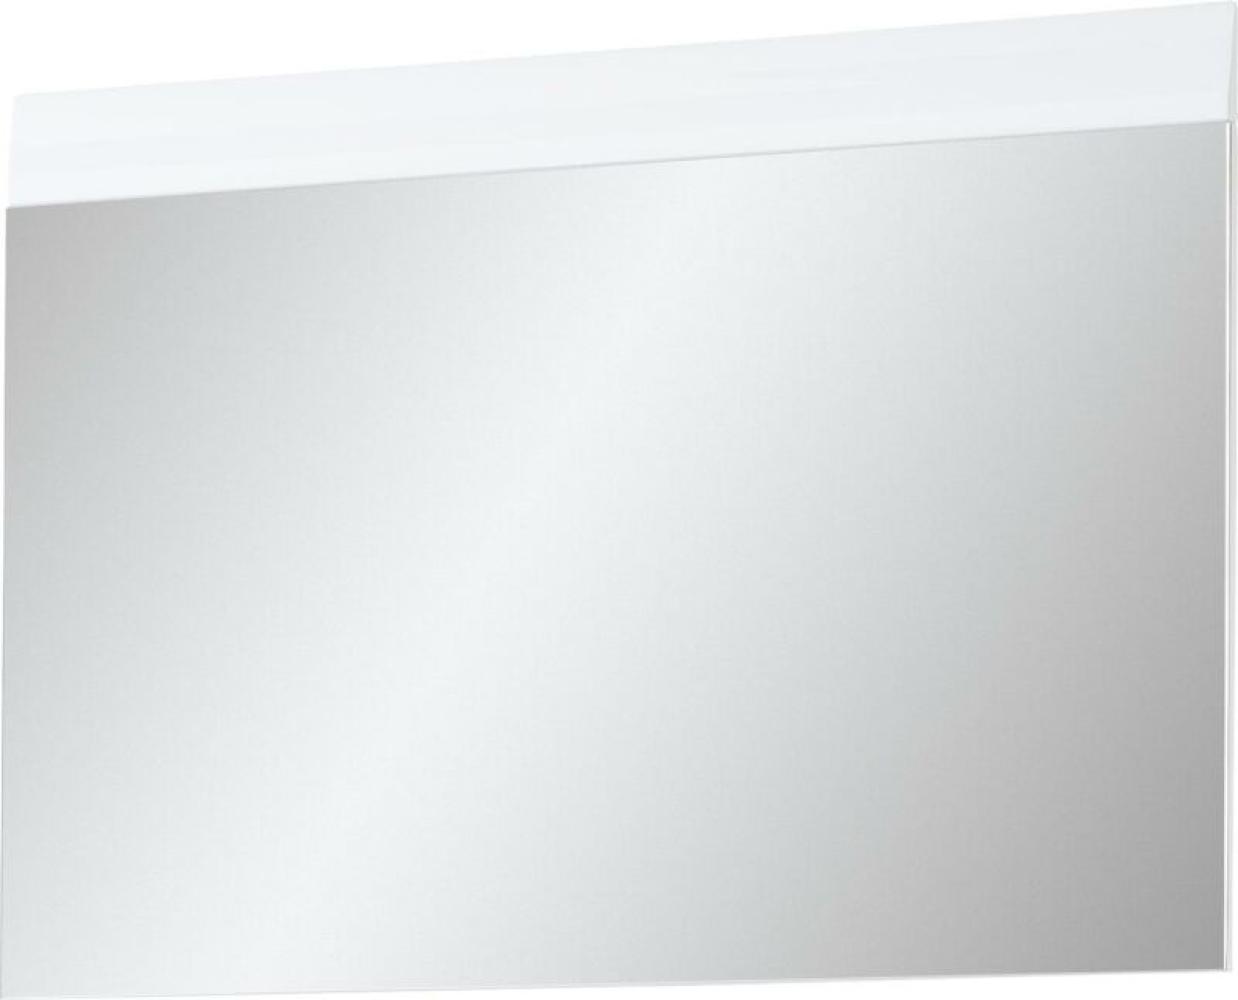 Caldari Spiegel Sundbyberg weiß, 89x63x3 cm Bild 1